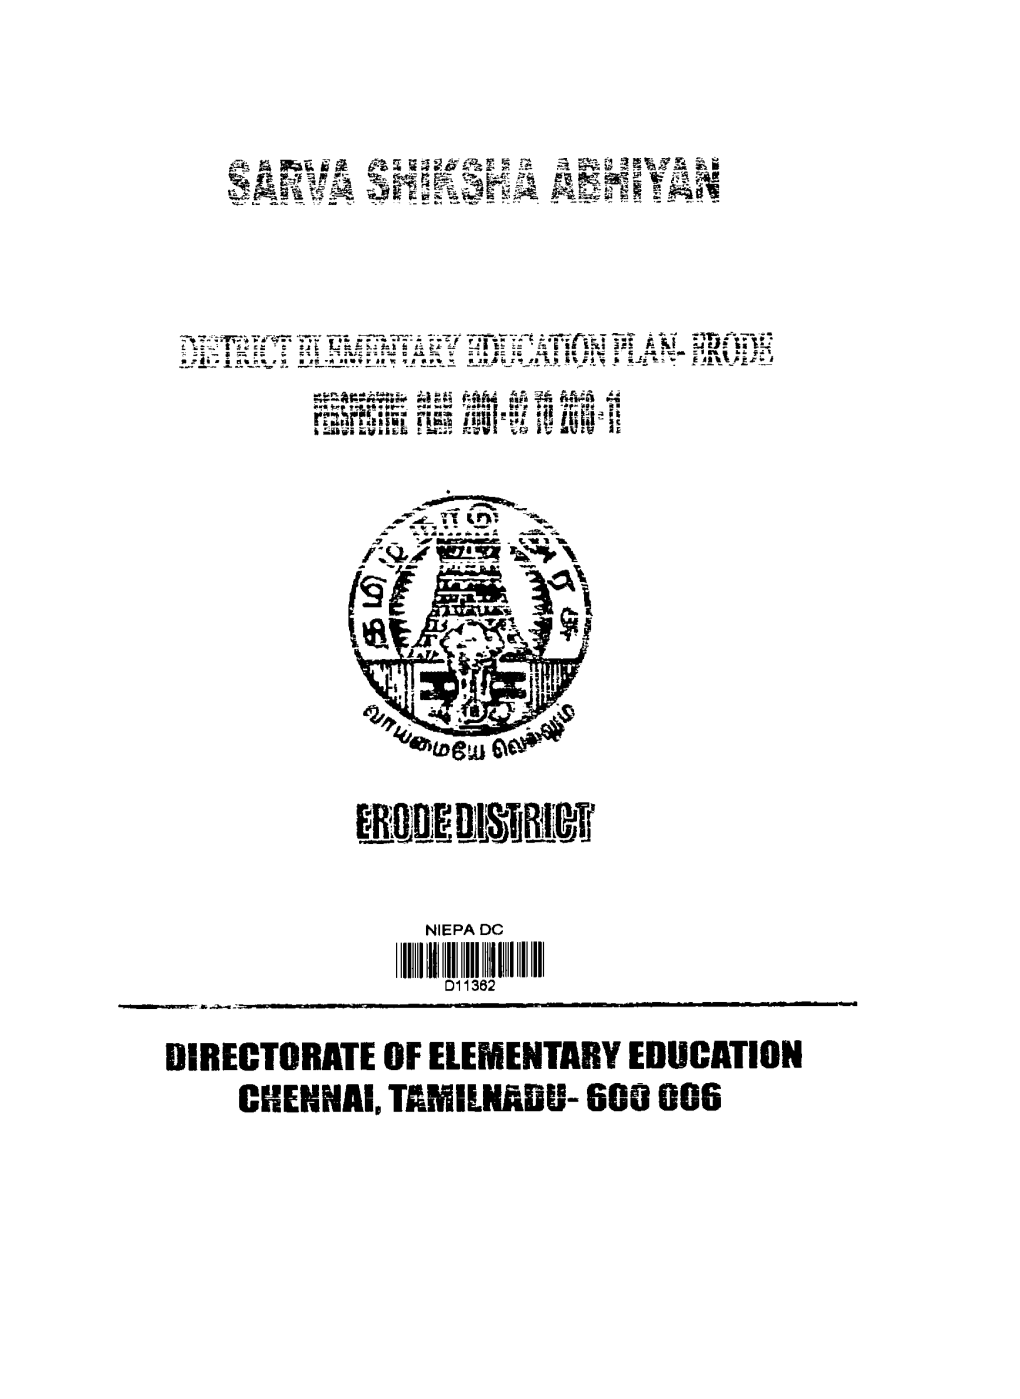 E Illiii DIRECTORATE of ELEMENTARV EDUCATION